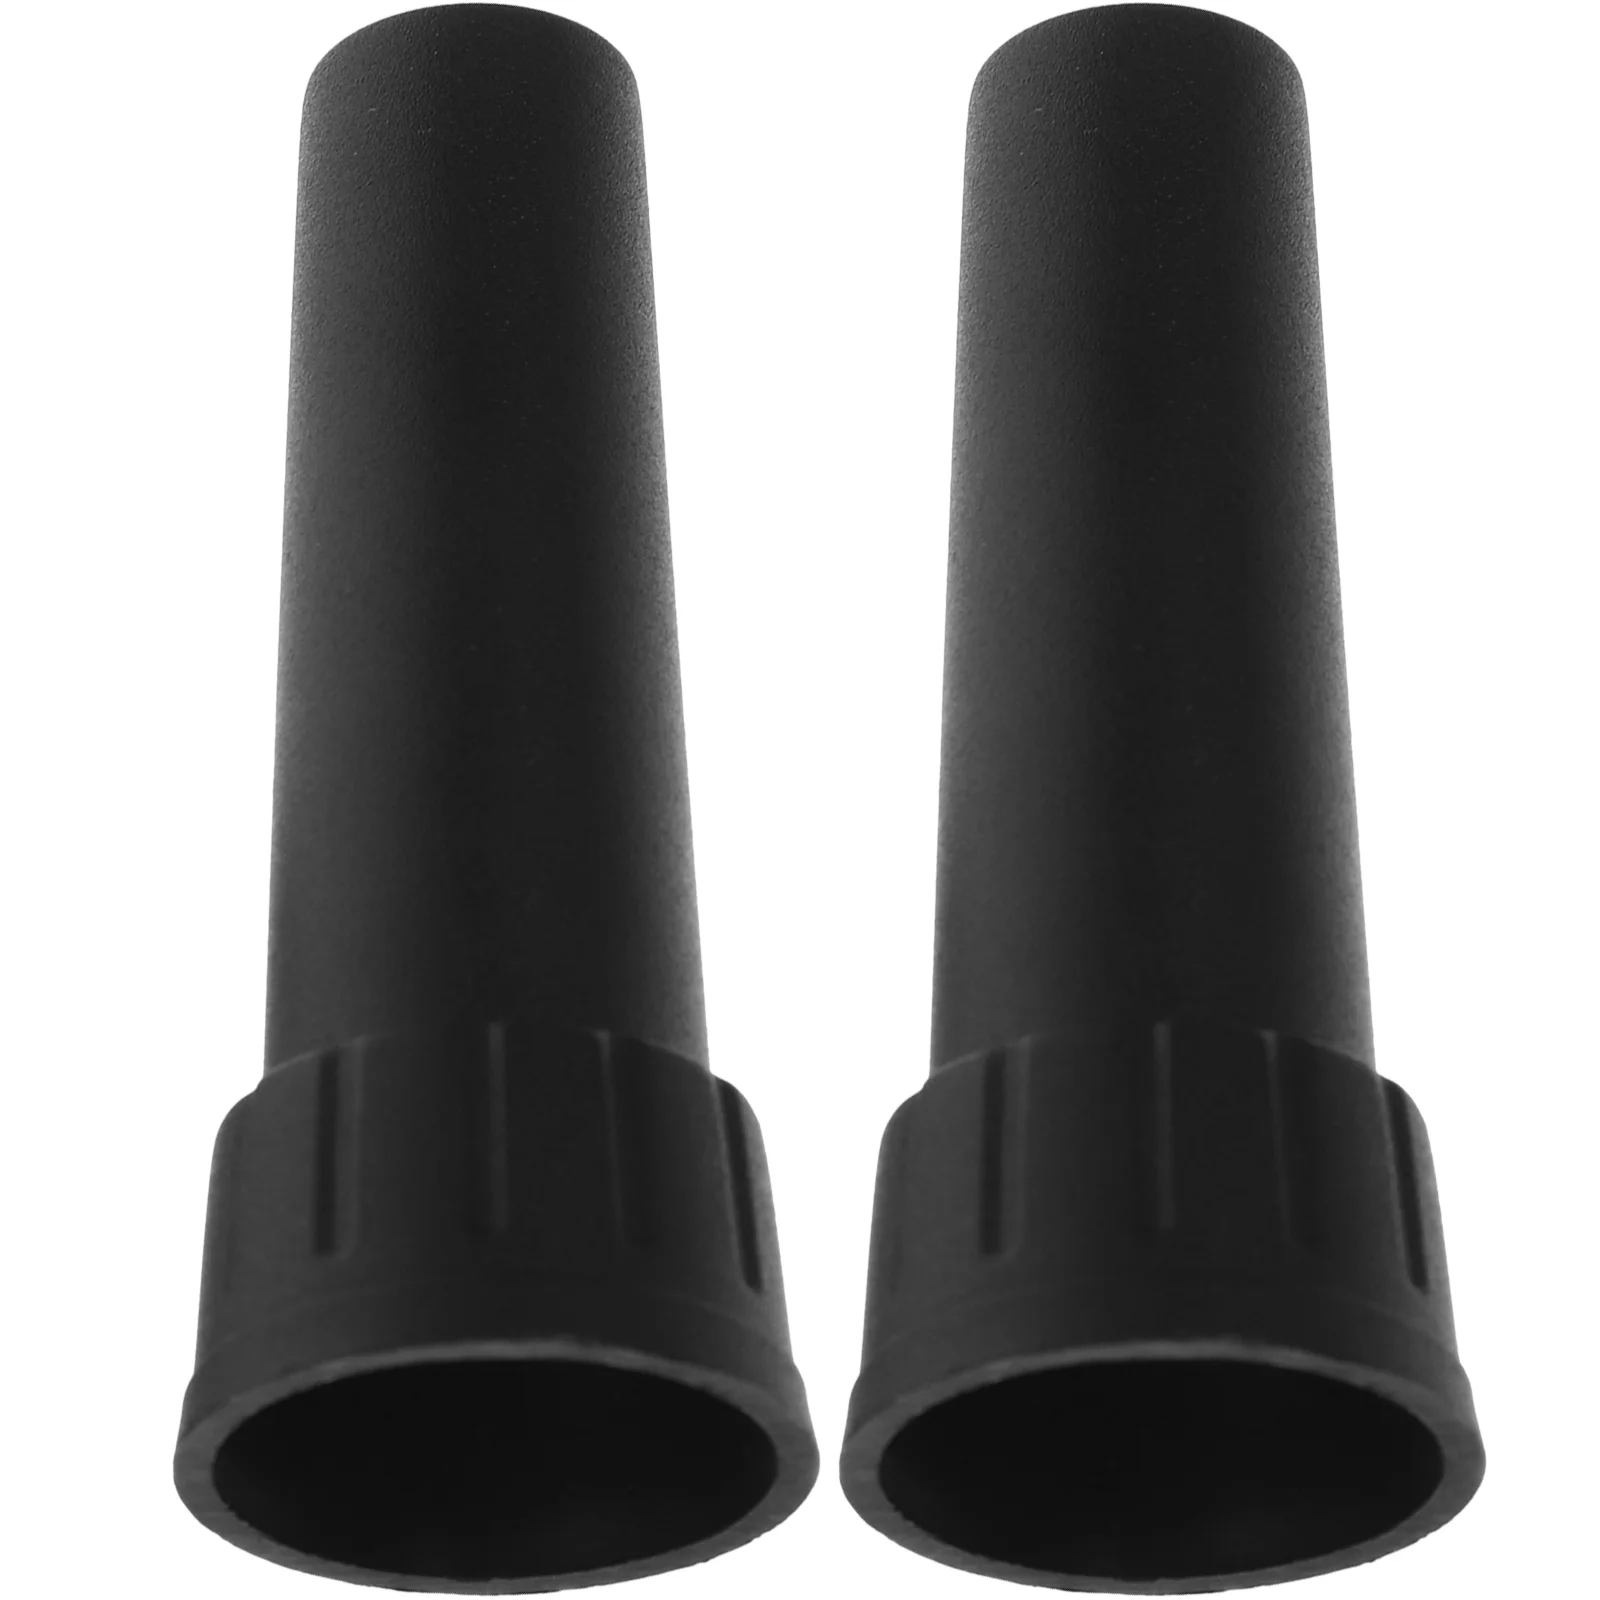 

2 Pcs Umbrella Cane Accessories Rain Repair Kit Replacement Tops Cover Caps Supply Ends